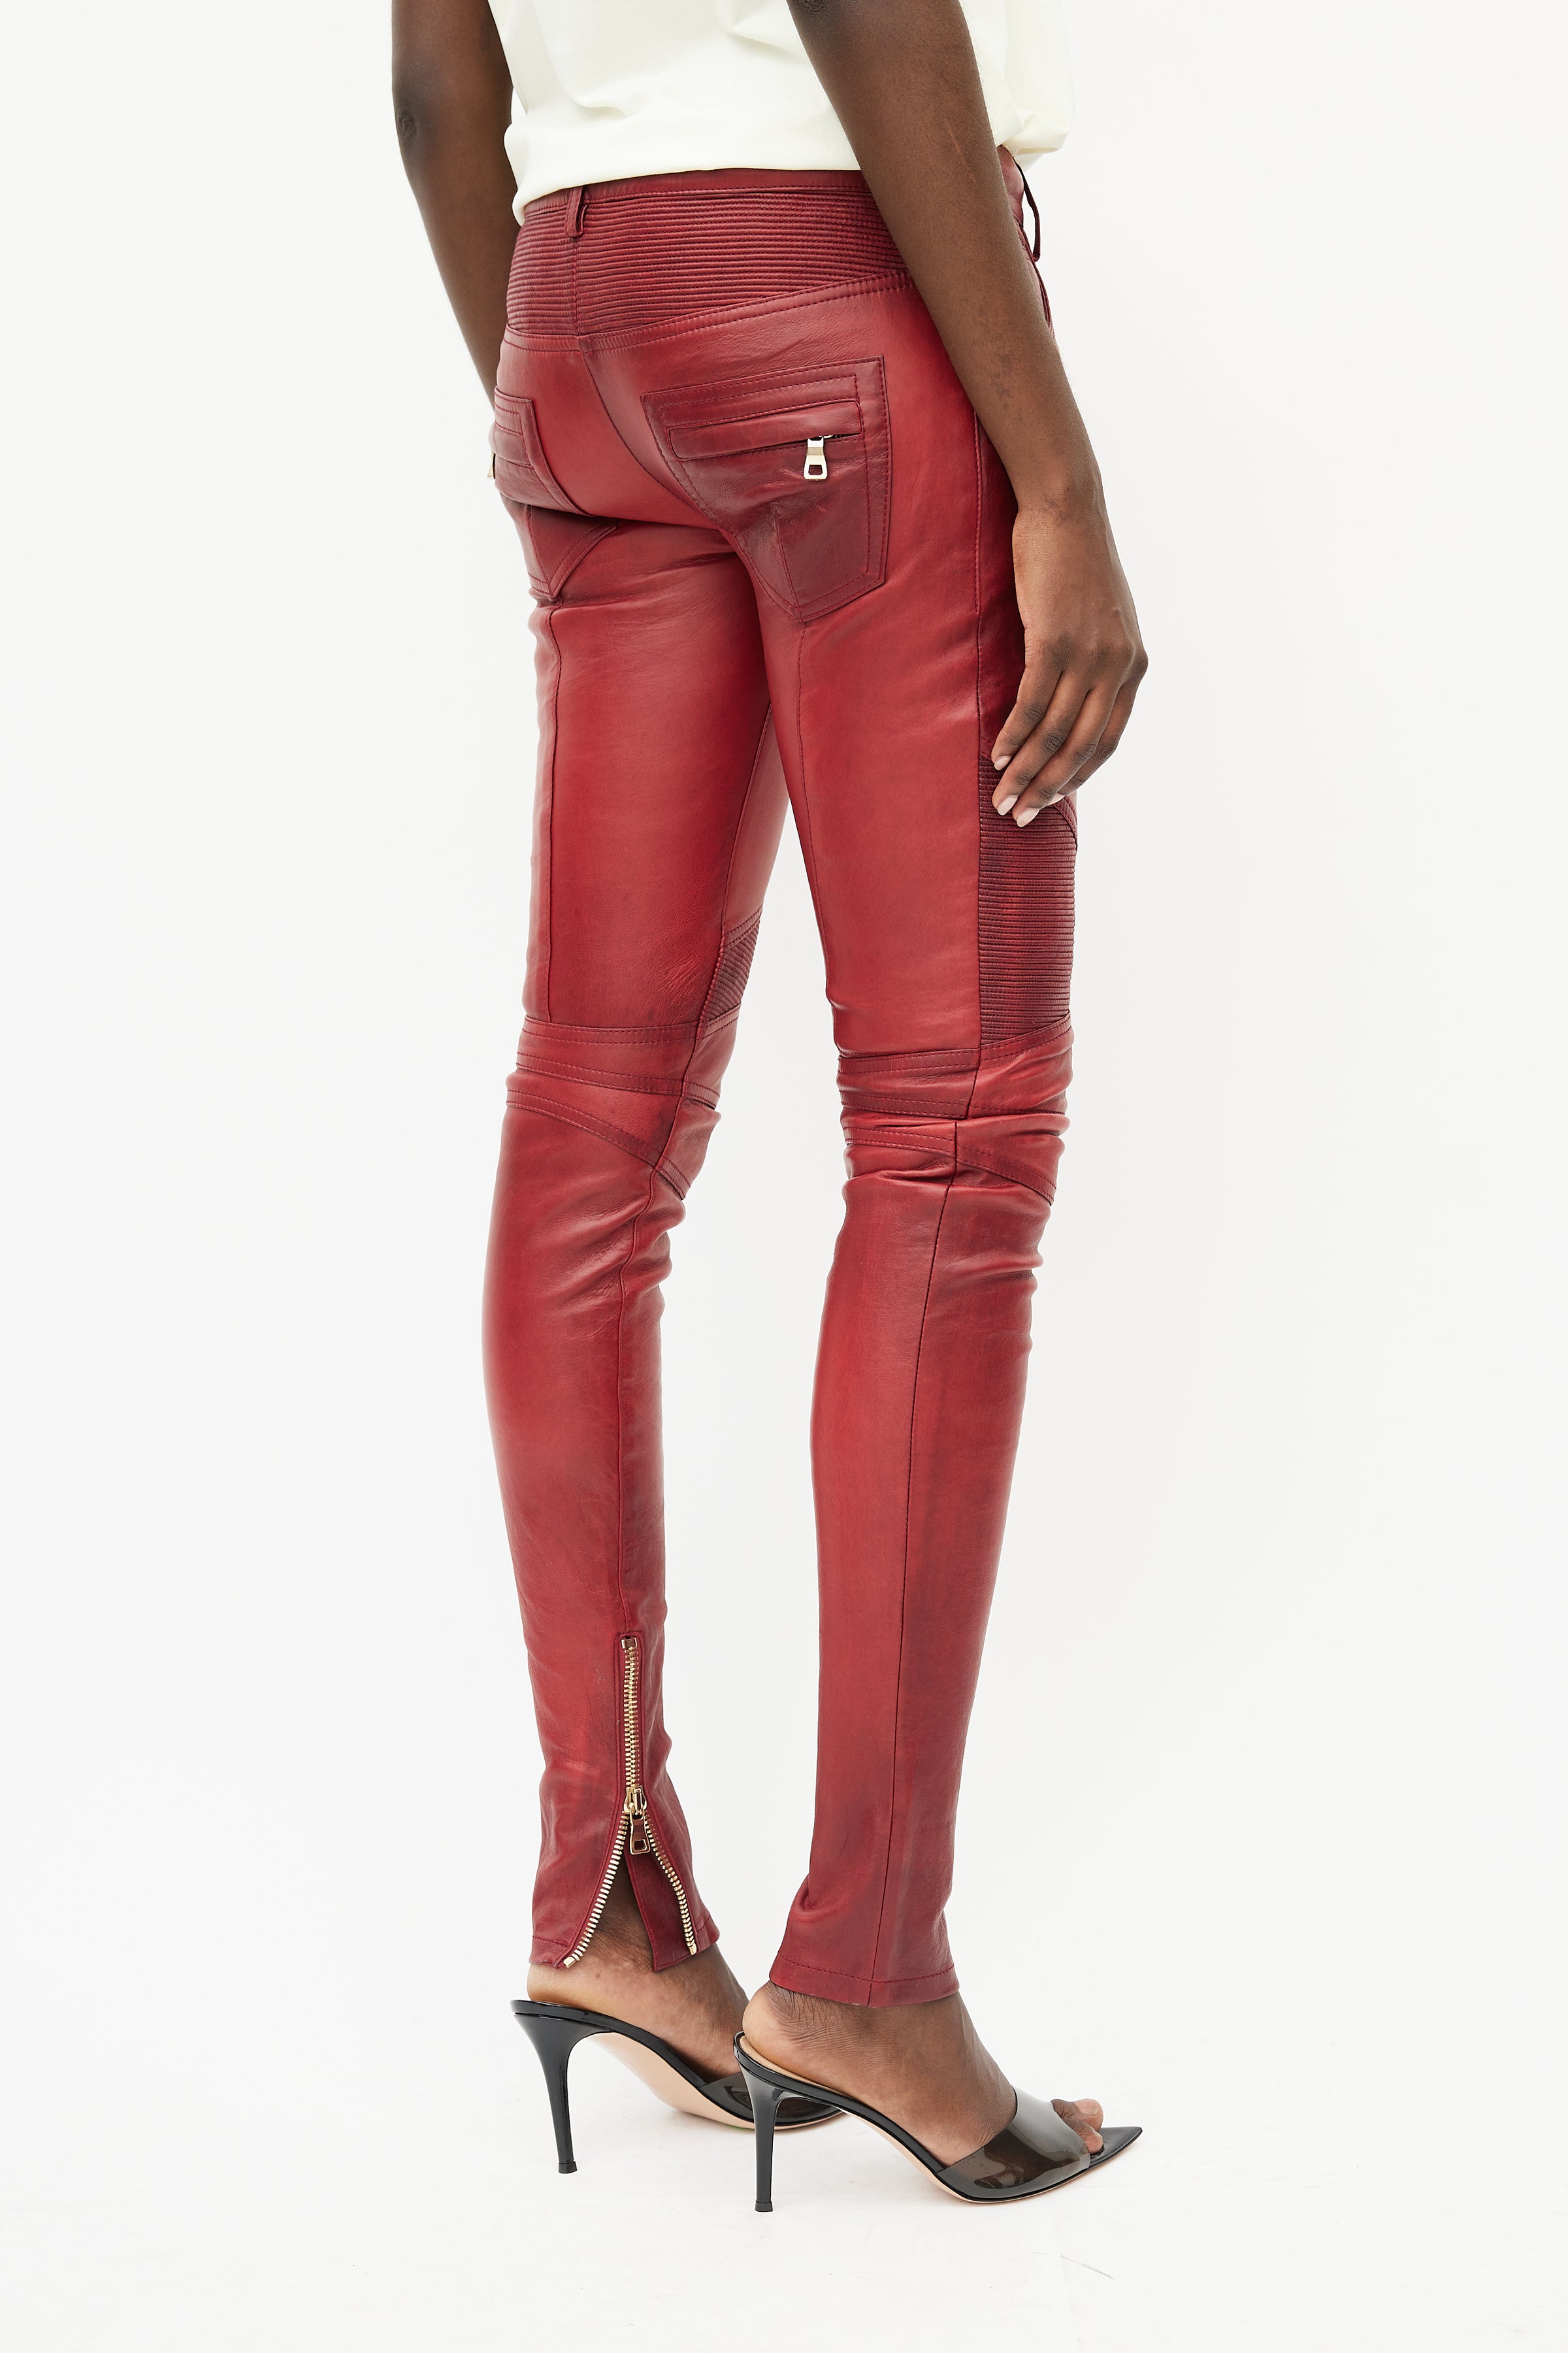 Balmain leather pants - Gem